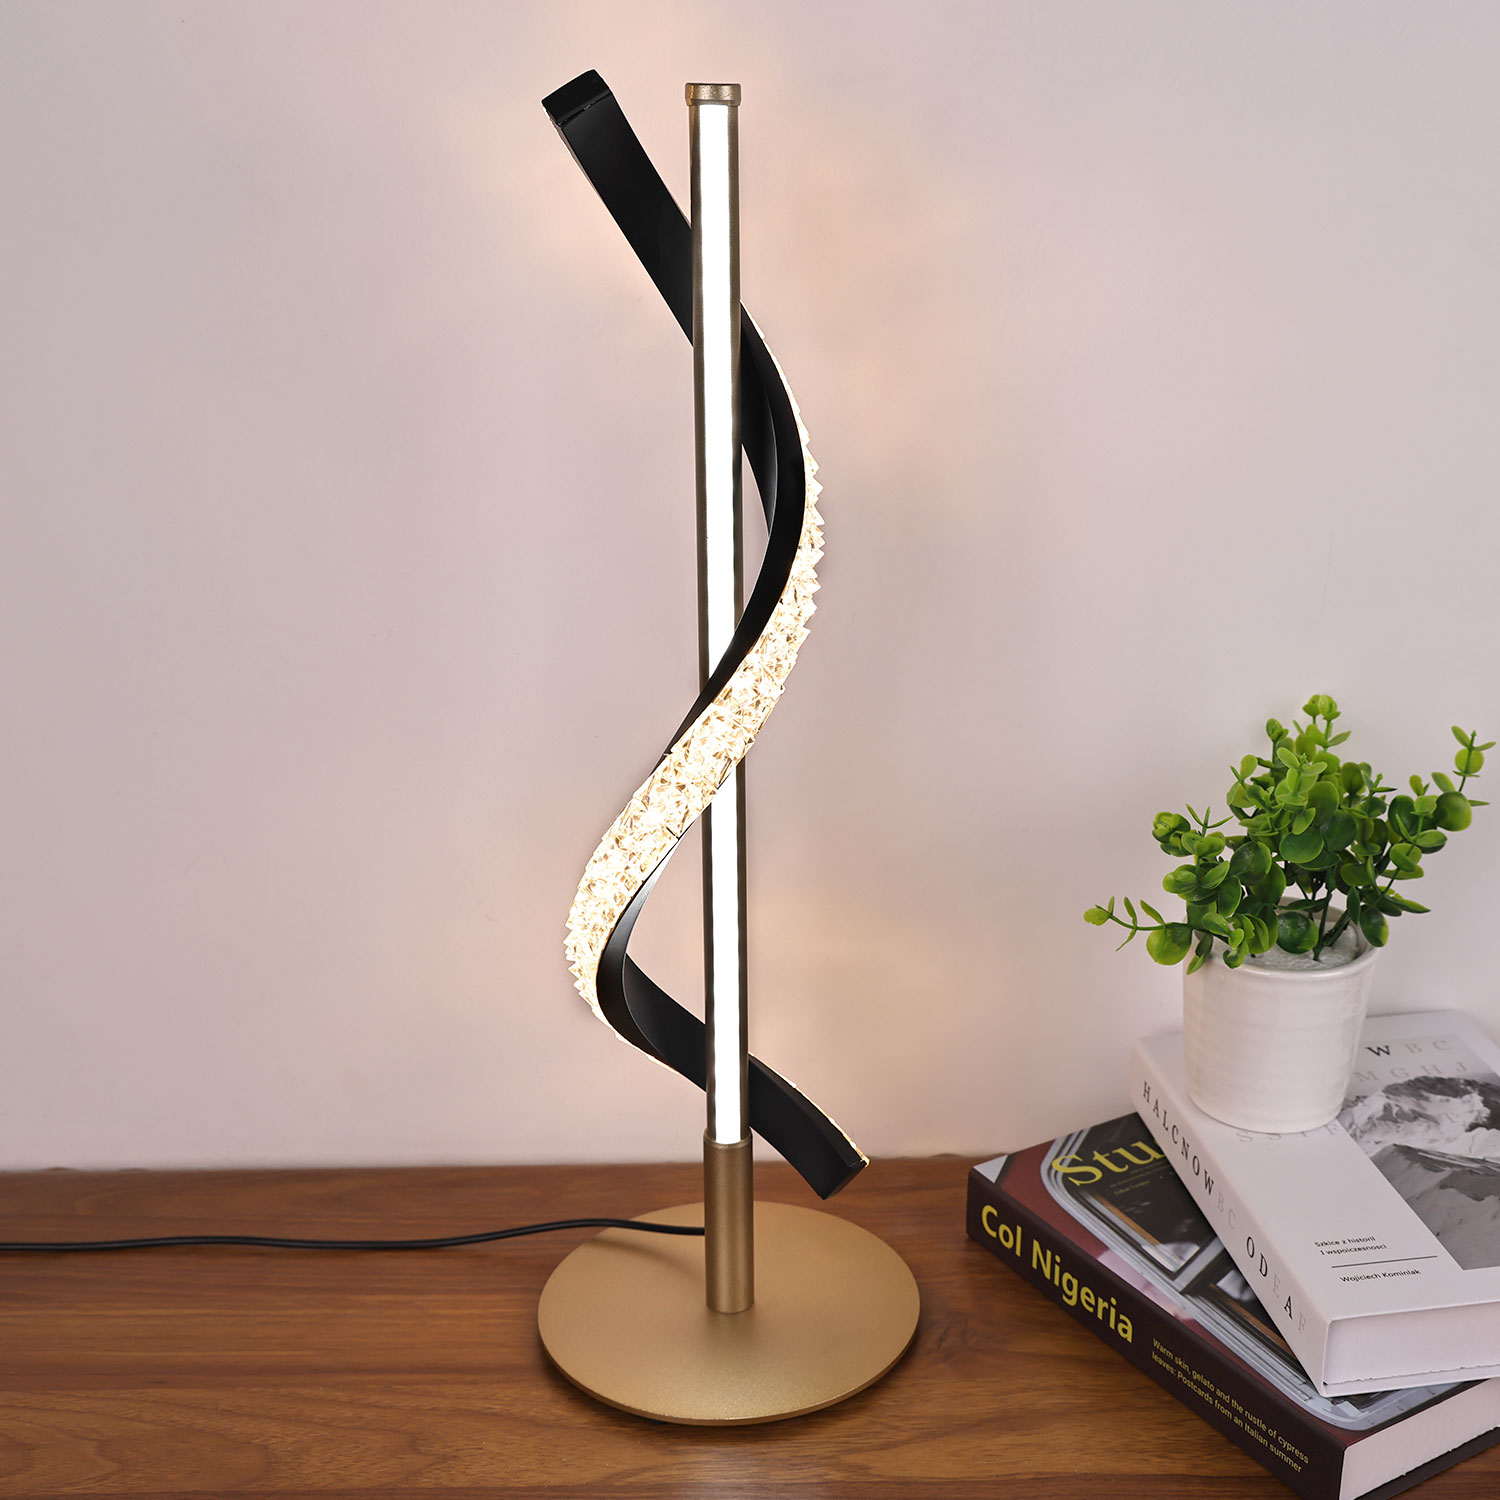 LED Light Fixtures Desk Lamp for Studying or Bedroom